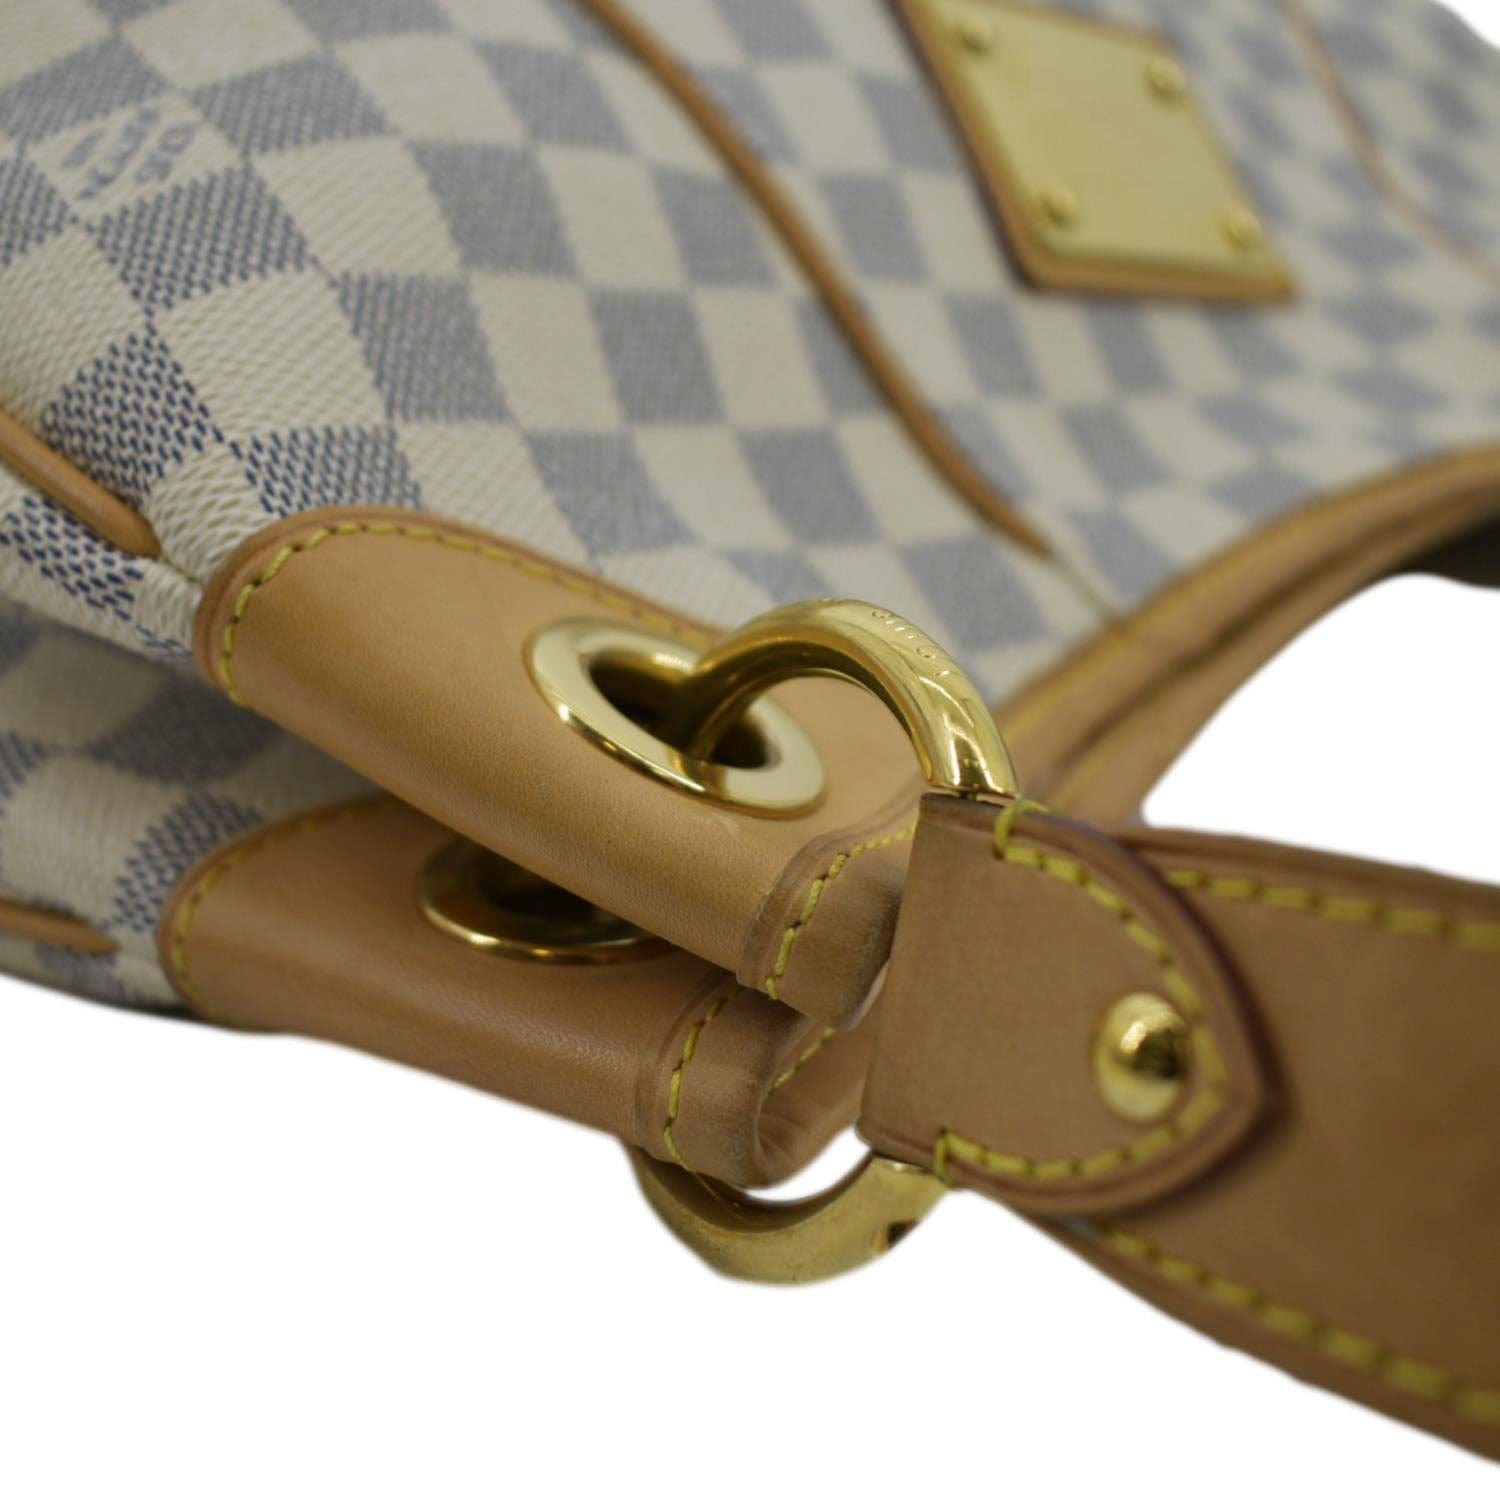 Louis Vuitton Damier Azur Galliera GM Hobo Bag at the best price